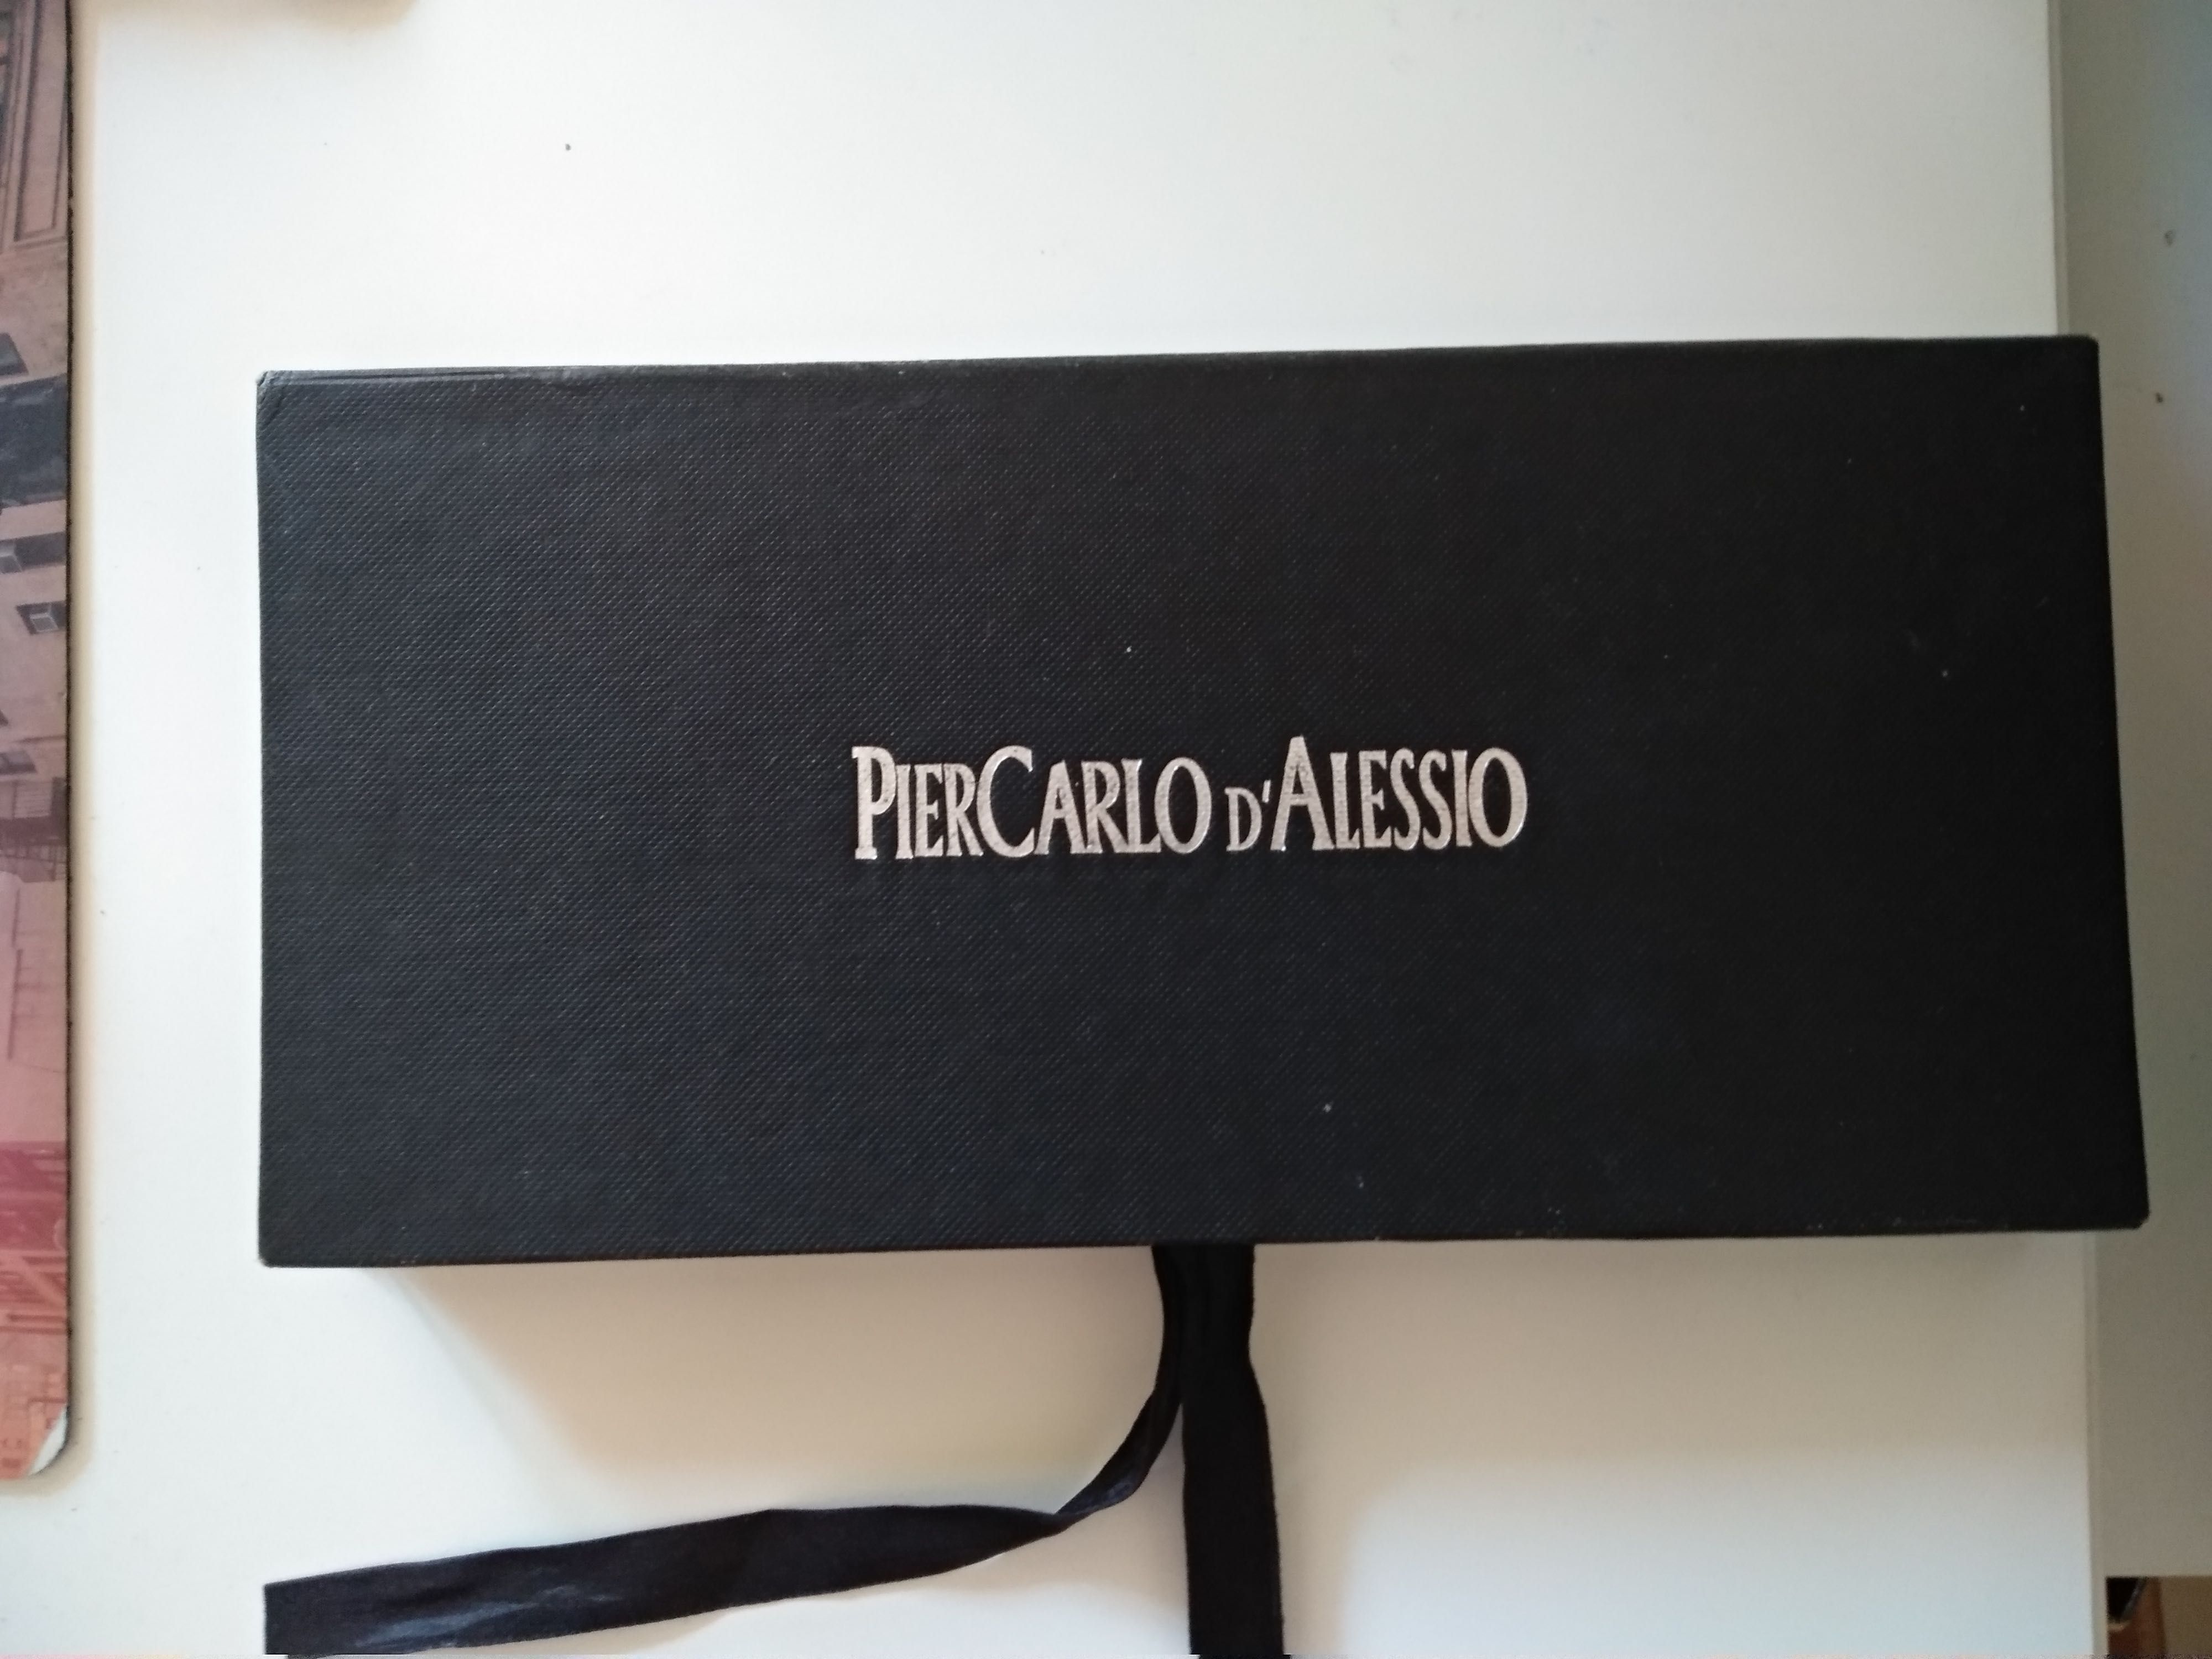 Braceletes Pier Paulo d'Alessio